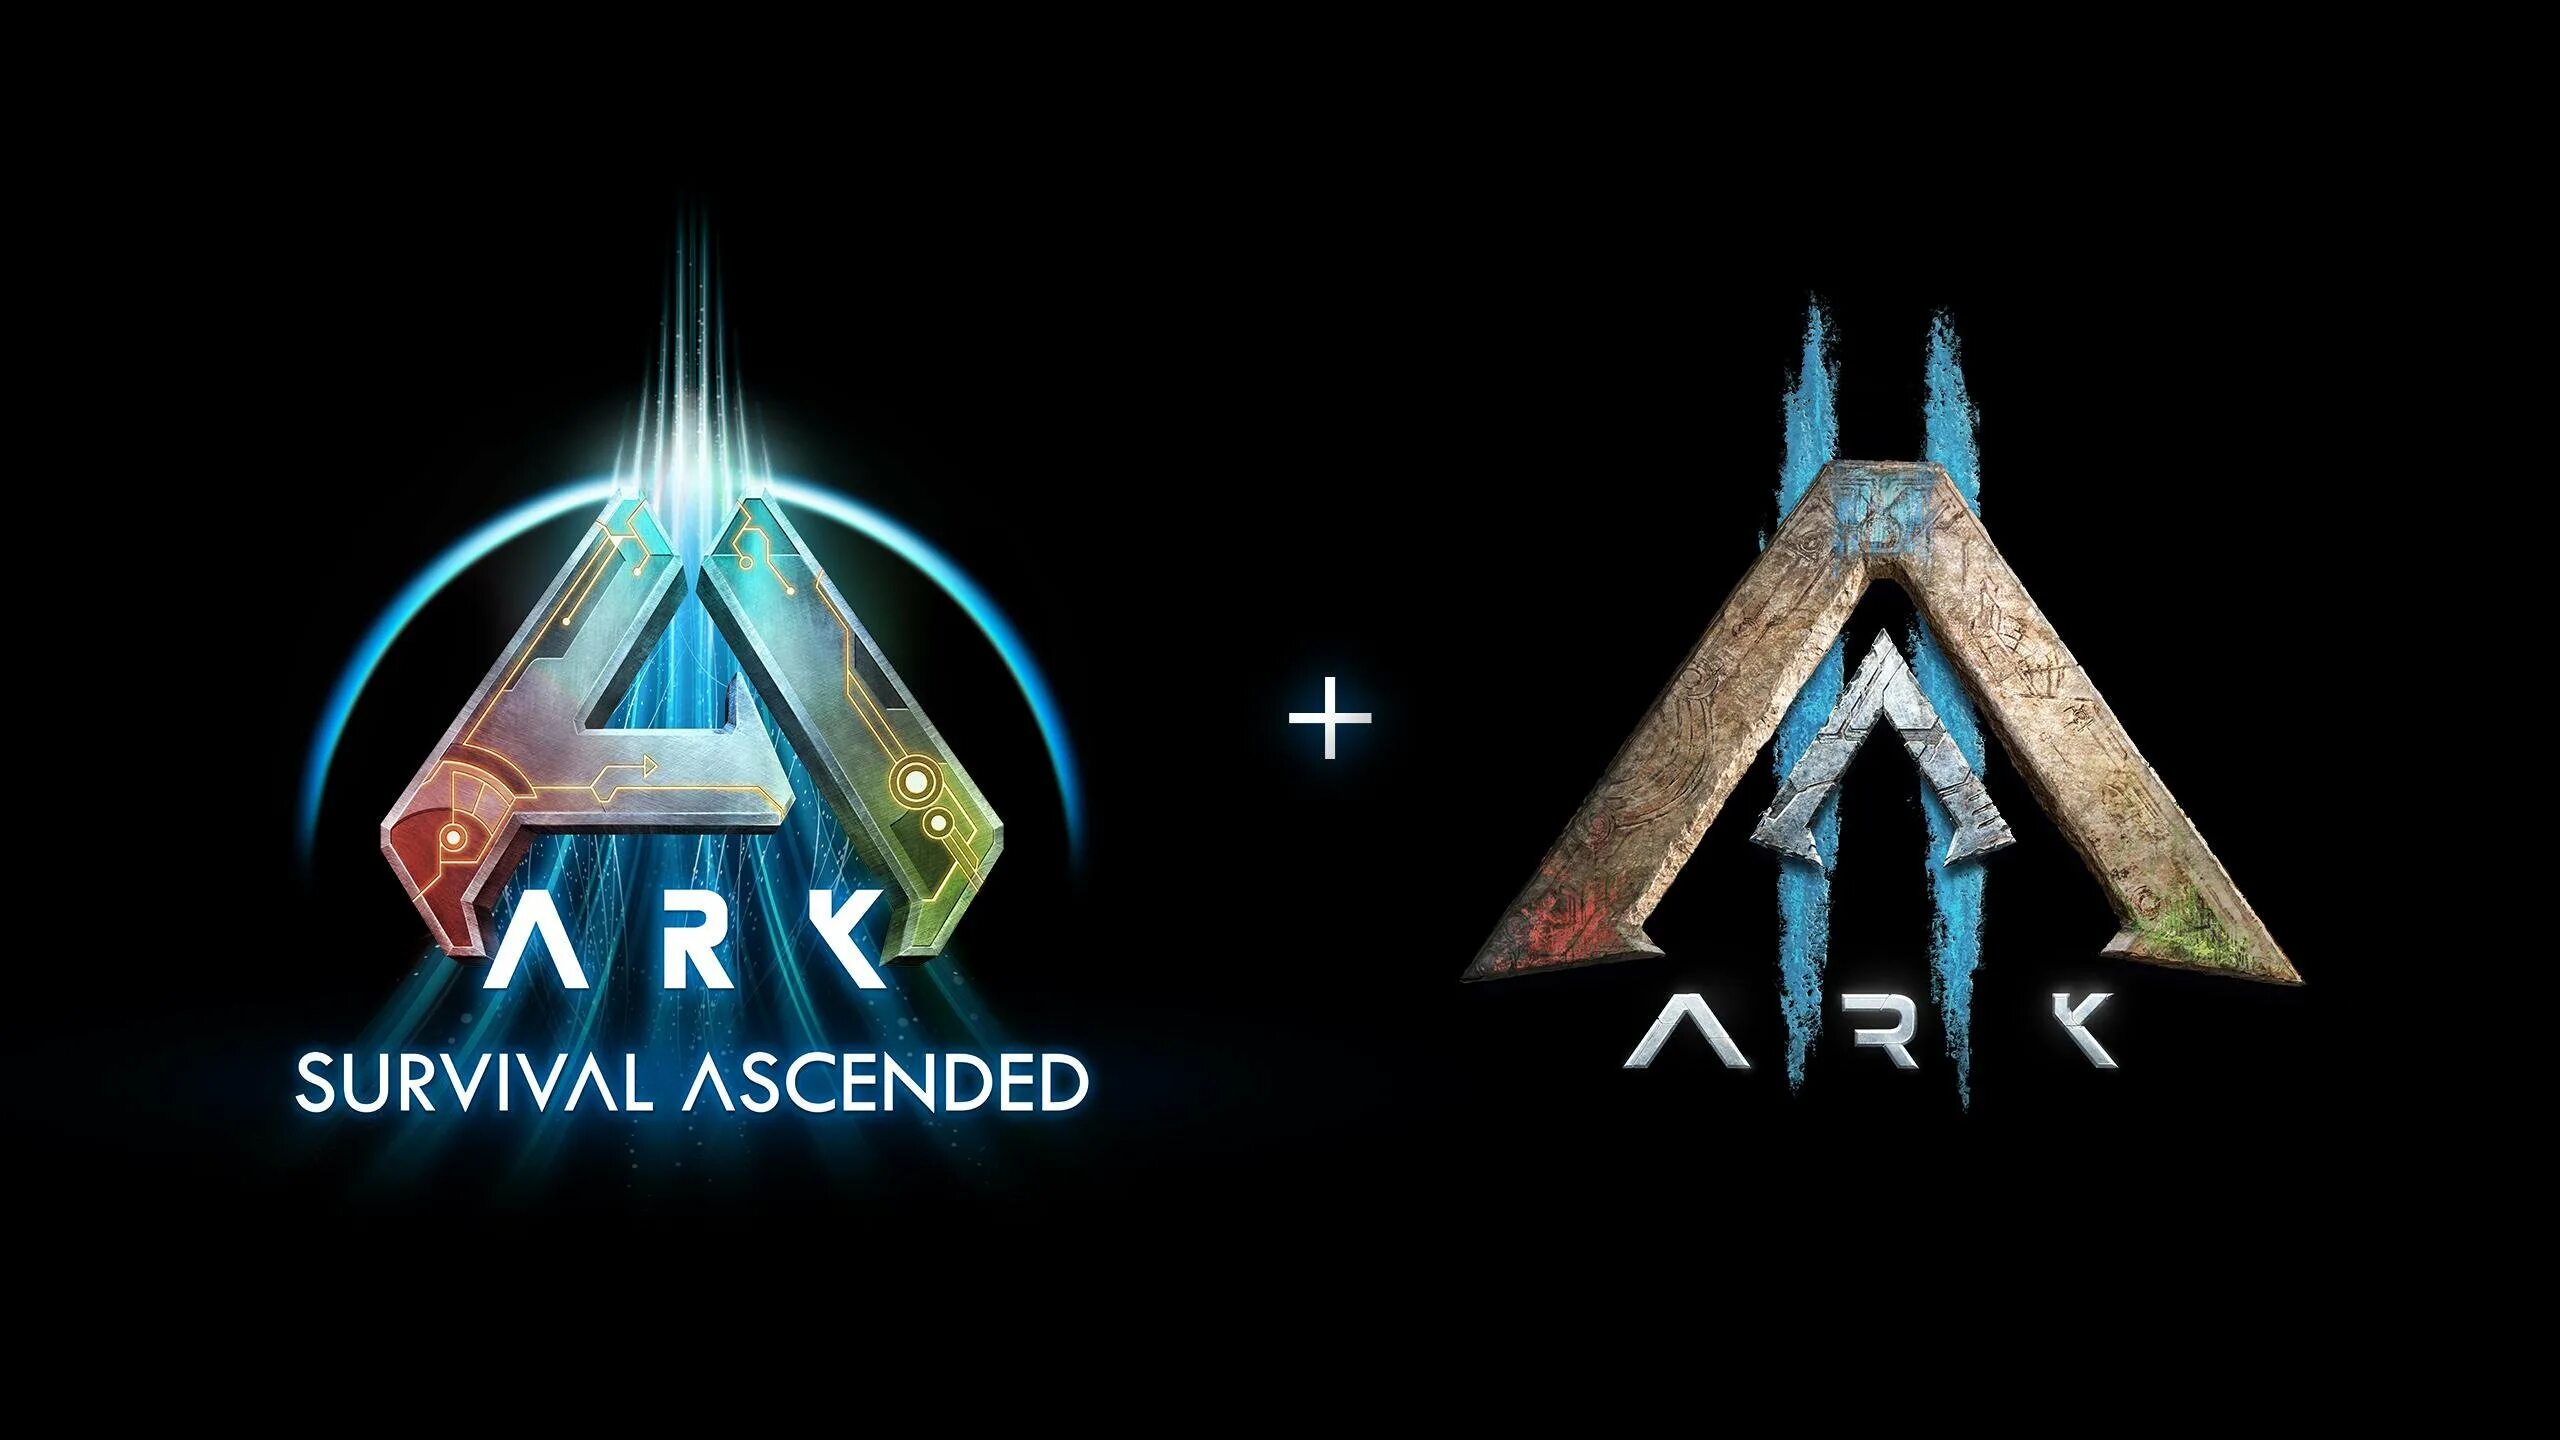 Ark ascended карта. АРК Ascended. Игра Ark 2. Ark Survival Ascended фото. Ark: Survival Ascended лого.